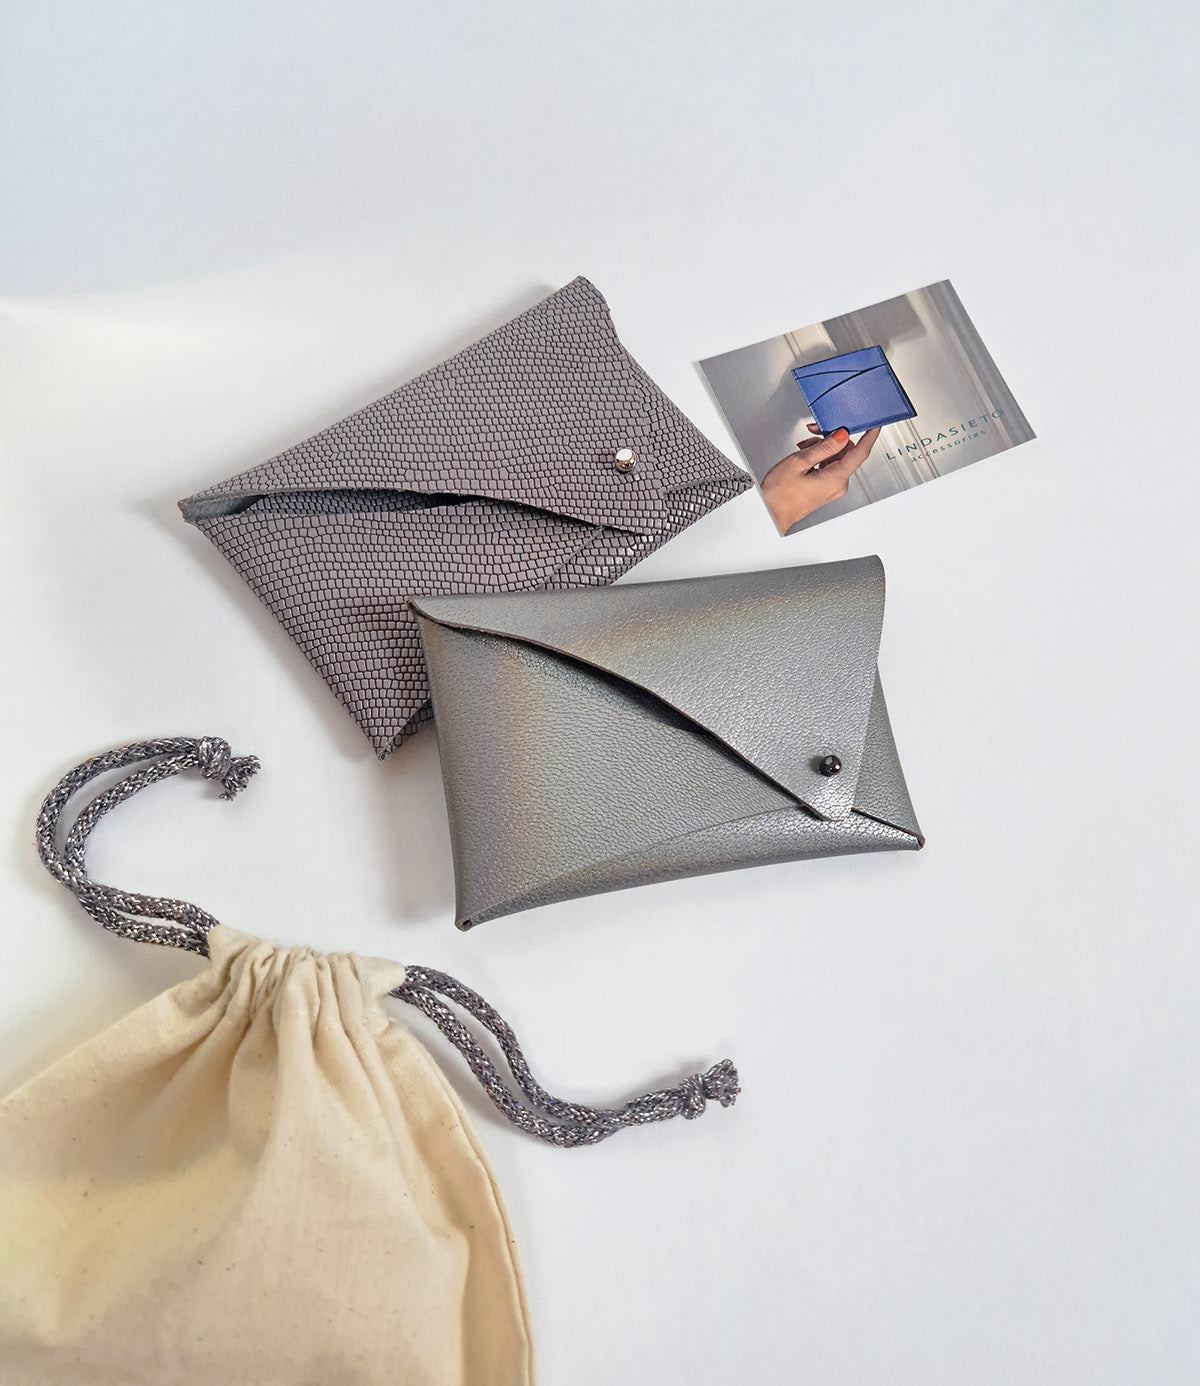 Womens handcrafted leather cardholder wallets, in taupe lilac, metallic grey, with cotton dust bag, gift wrap. Női designer bőr kártyatartók, ajándék csomagolással magyar tervezőtől.